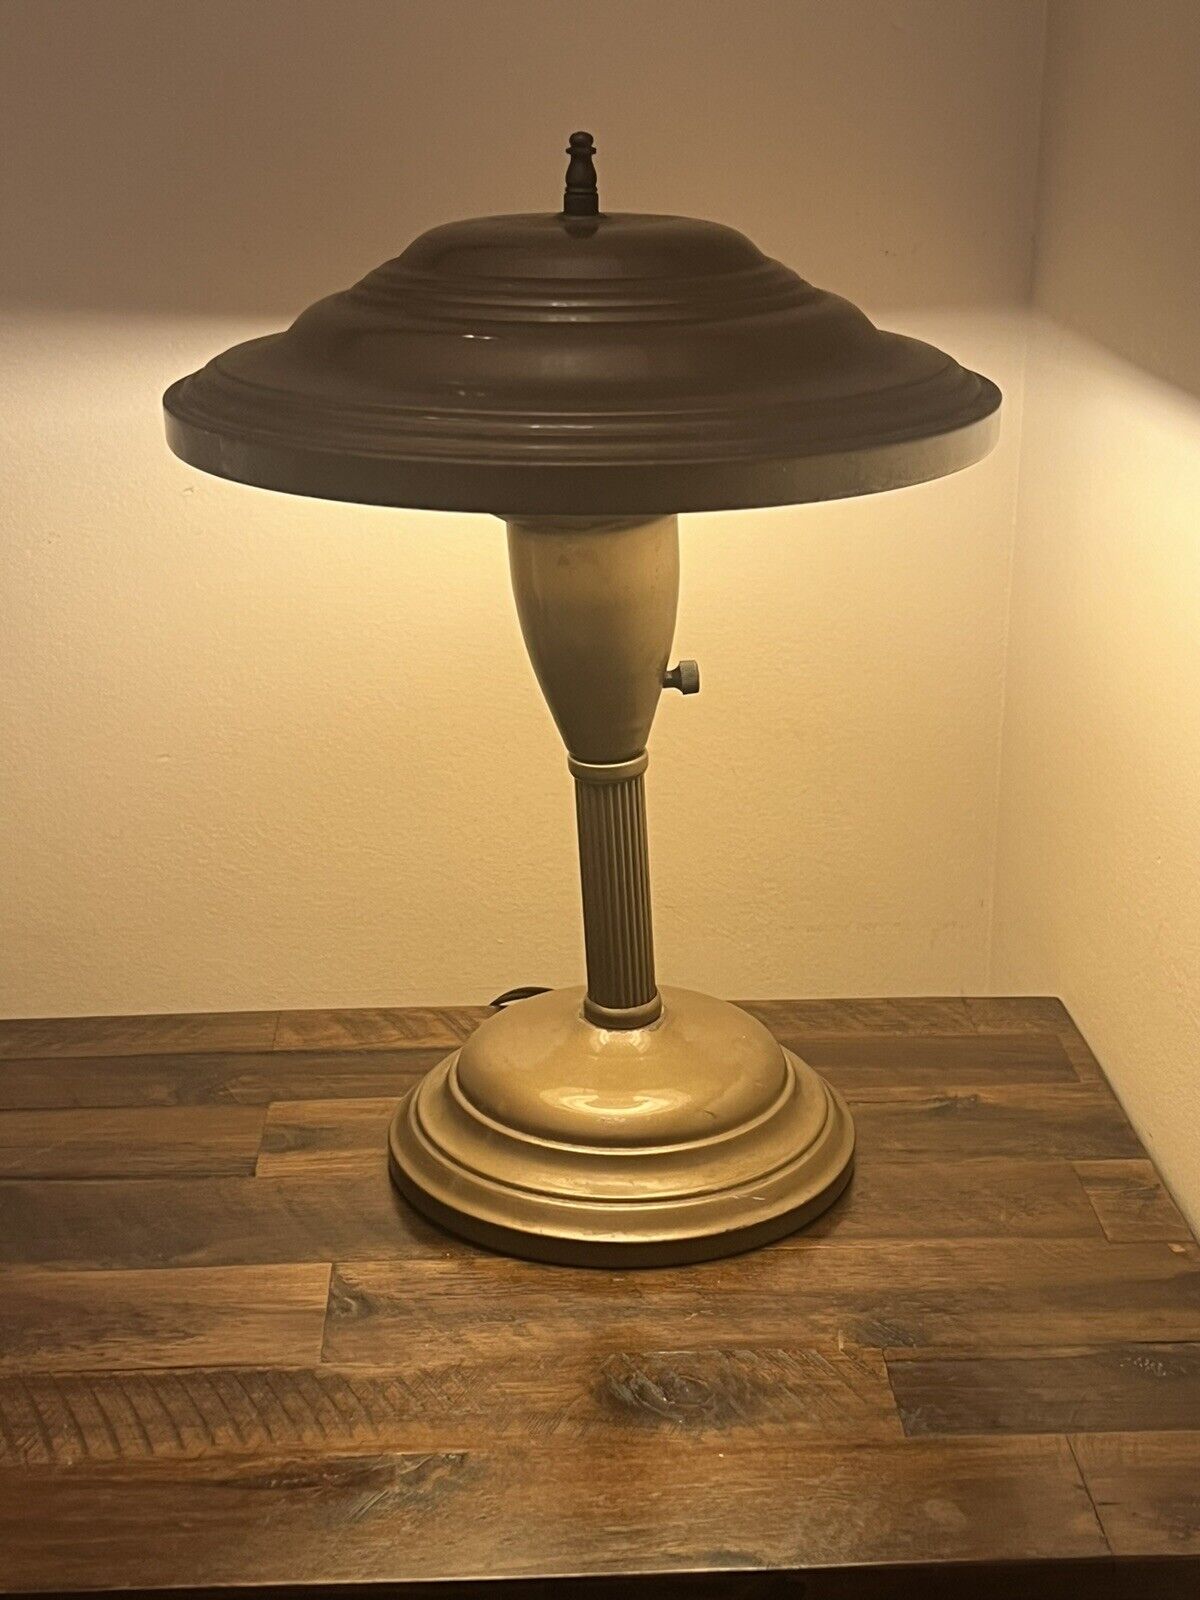 VTG Mid-Century Modern Space Age Table Desk UFO Flying Saucer Lamp 1960's